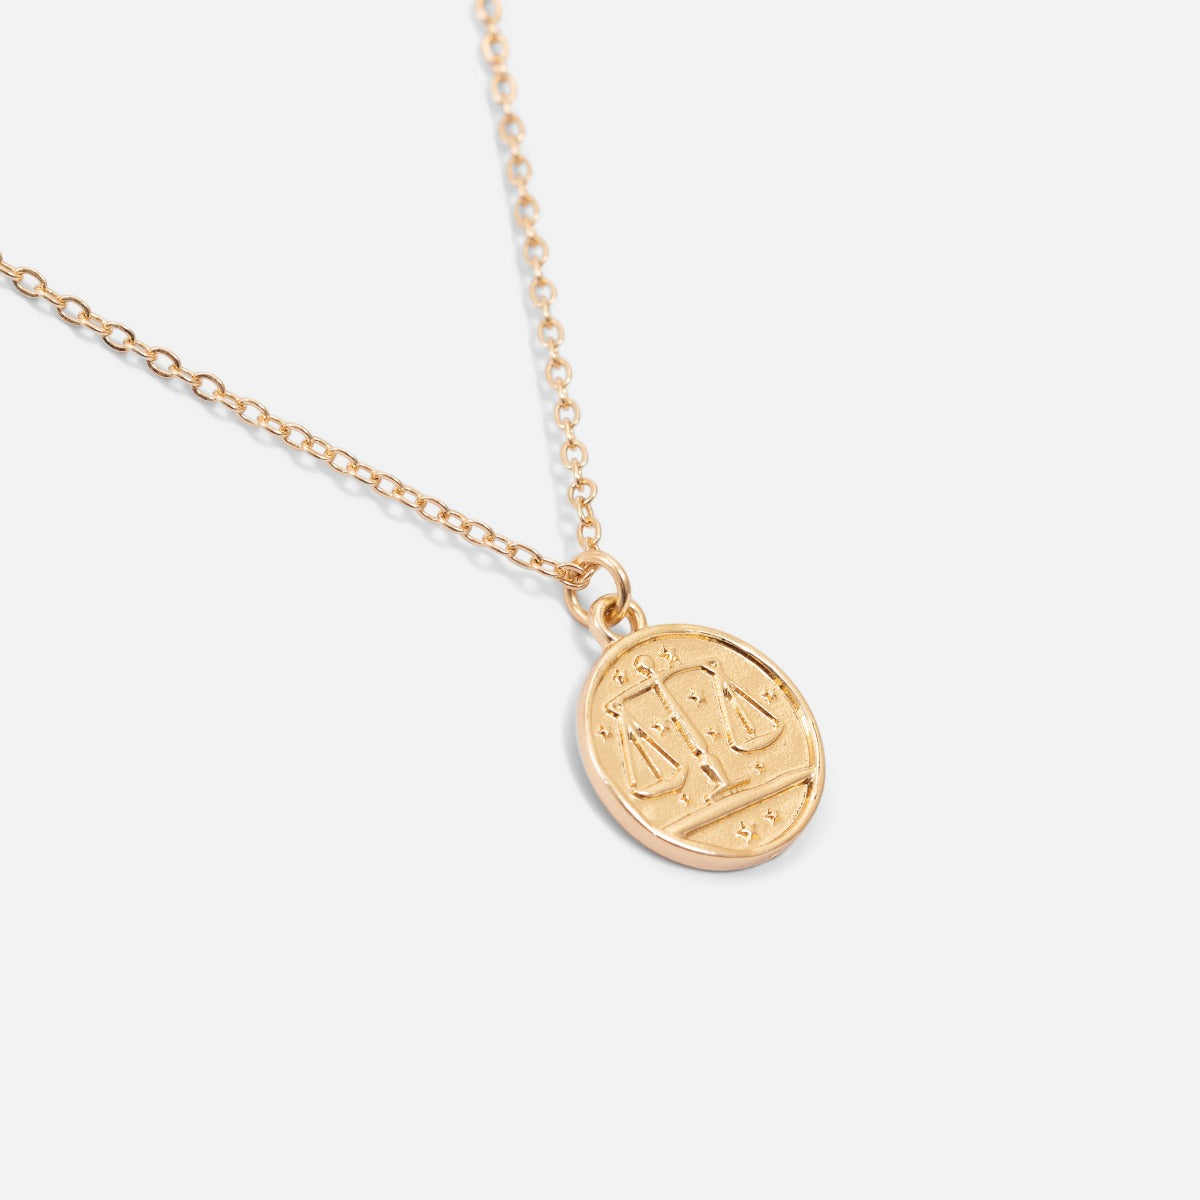 Golden pendant astrological sign "libra"